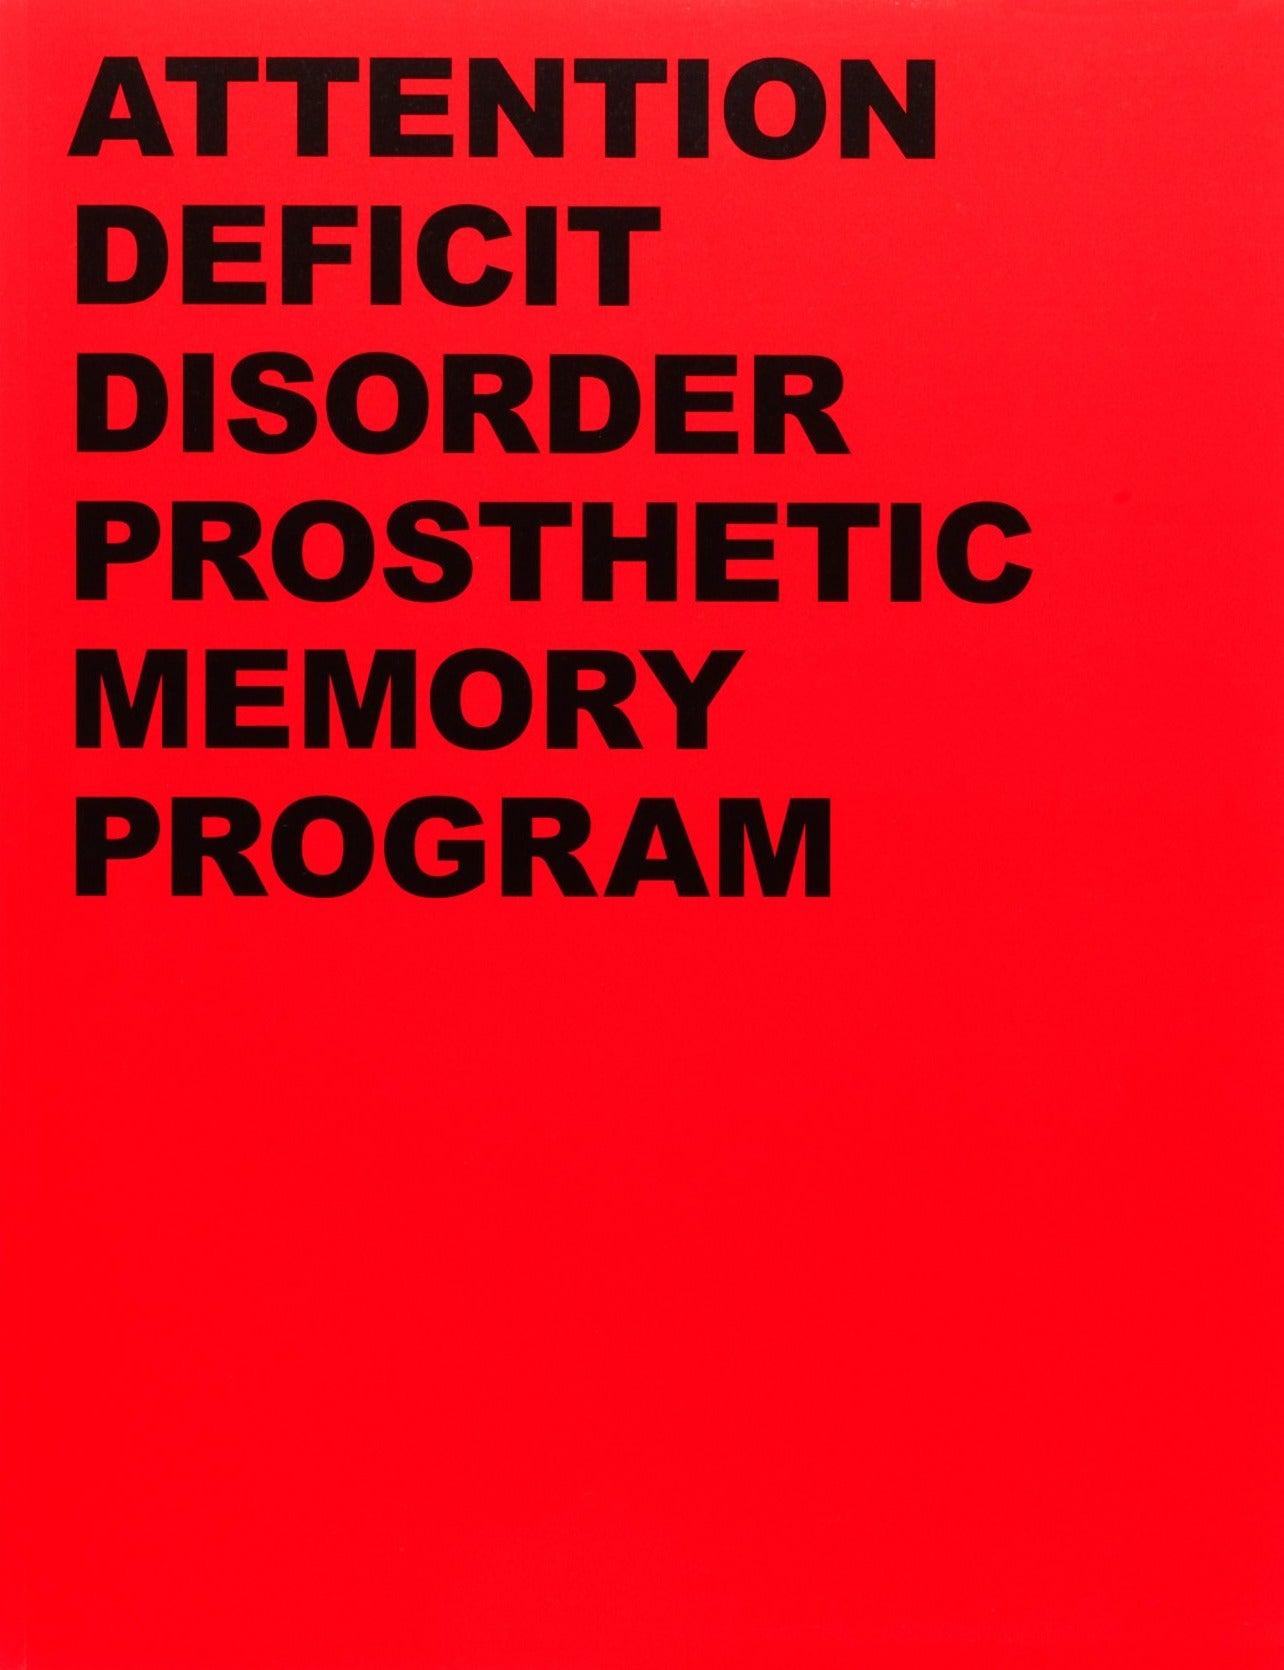 ADDPMP (Attention Deficit Disorder Prosthetic Memory Program) 001-999